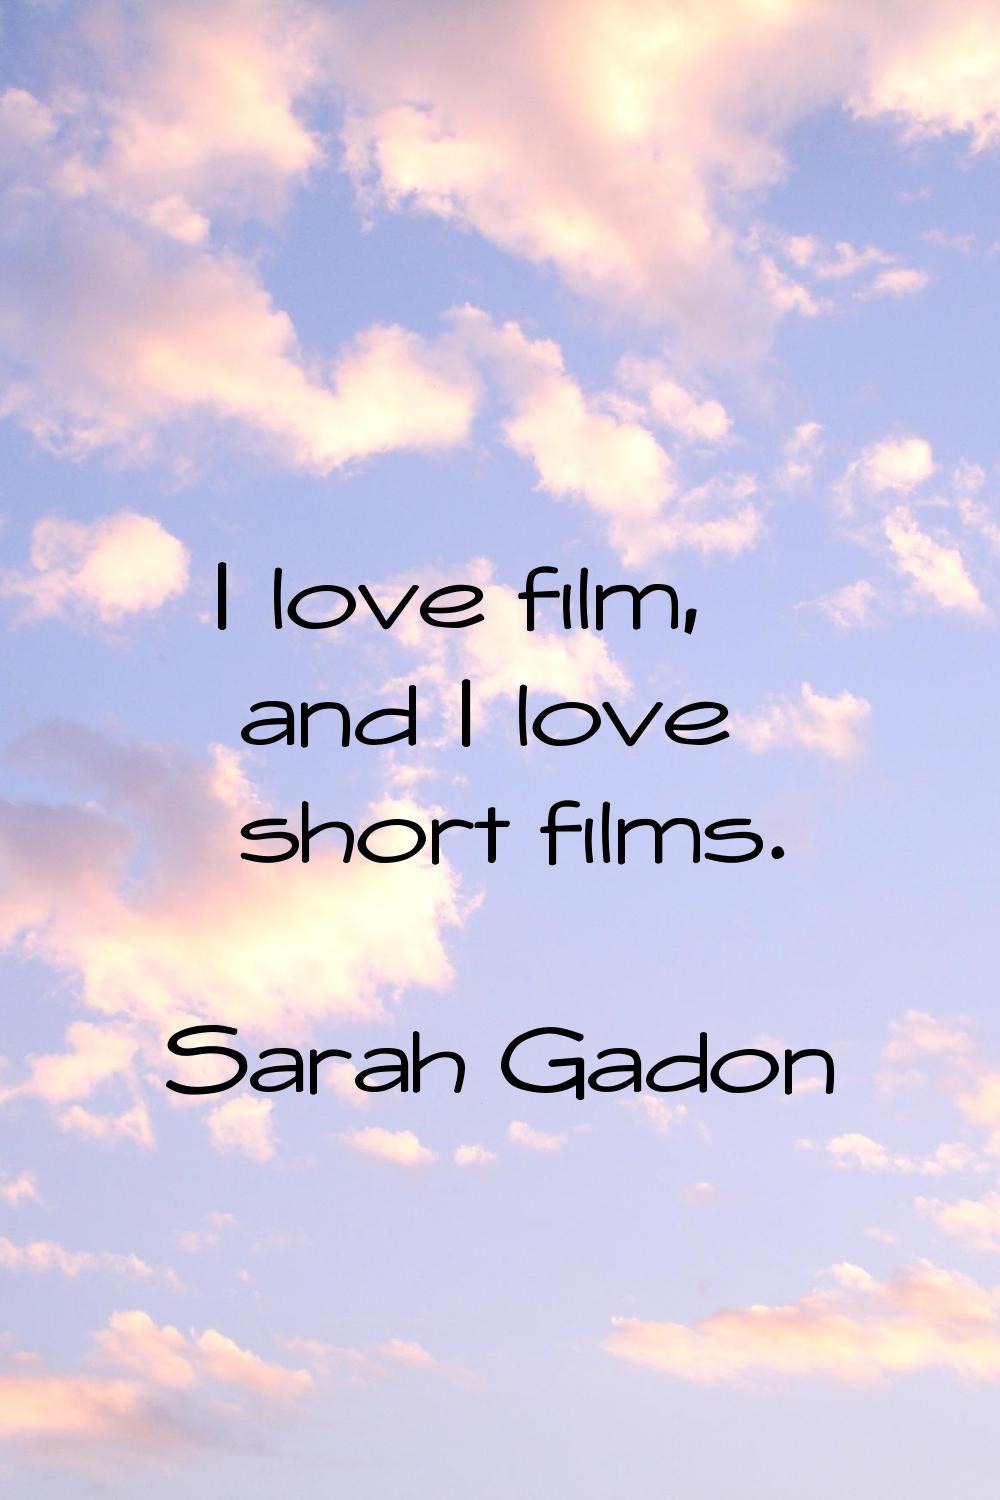 I love film, and I love short films.